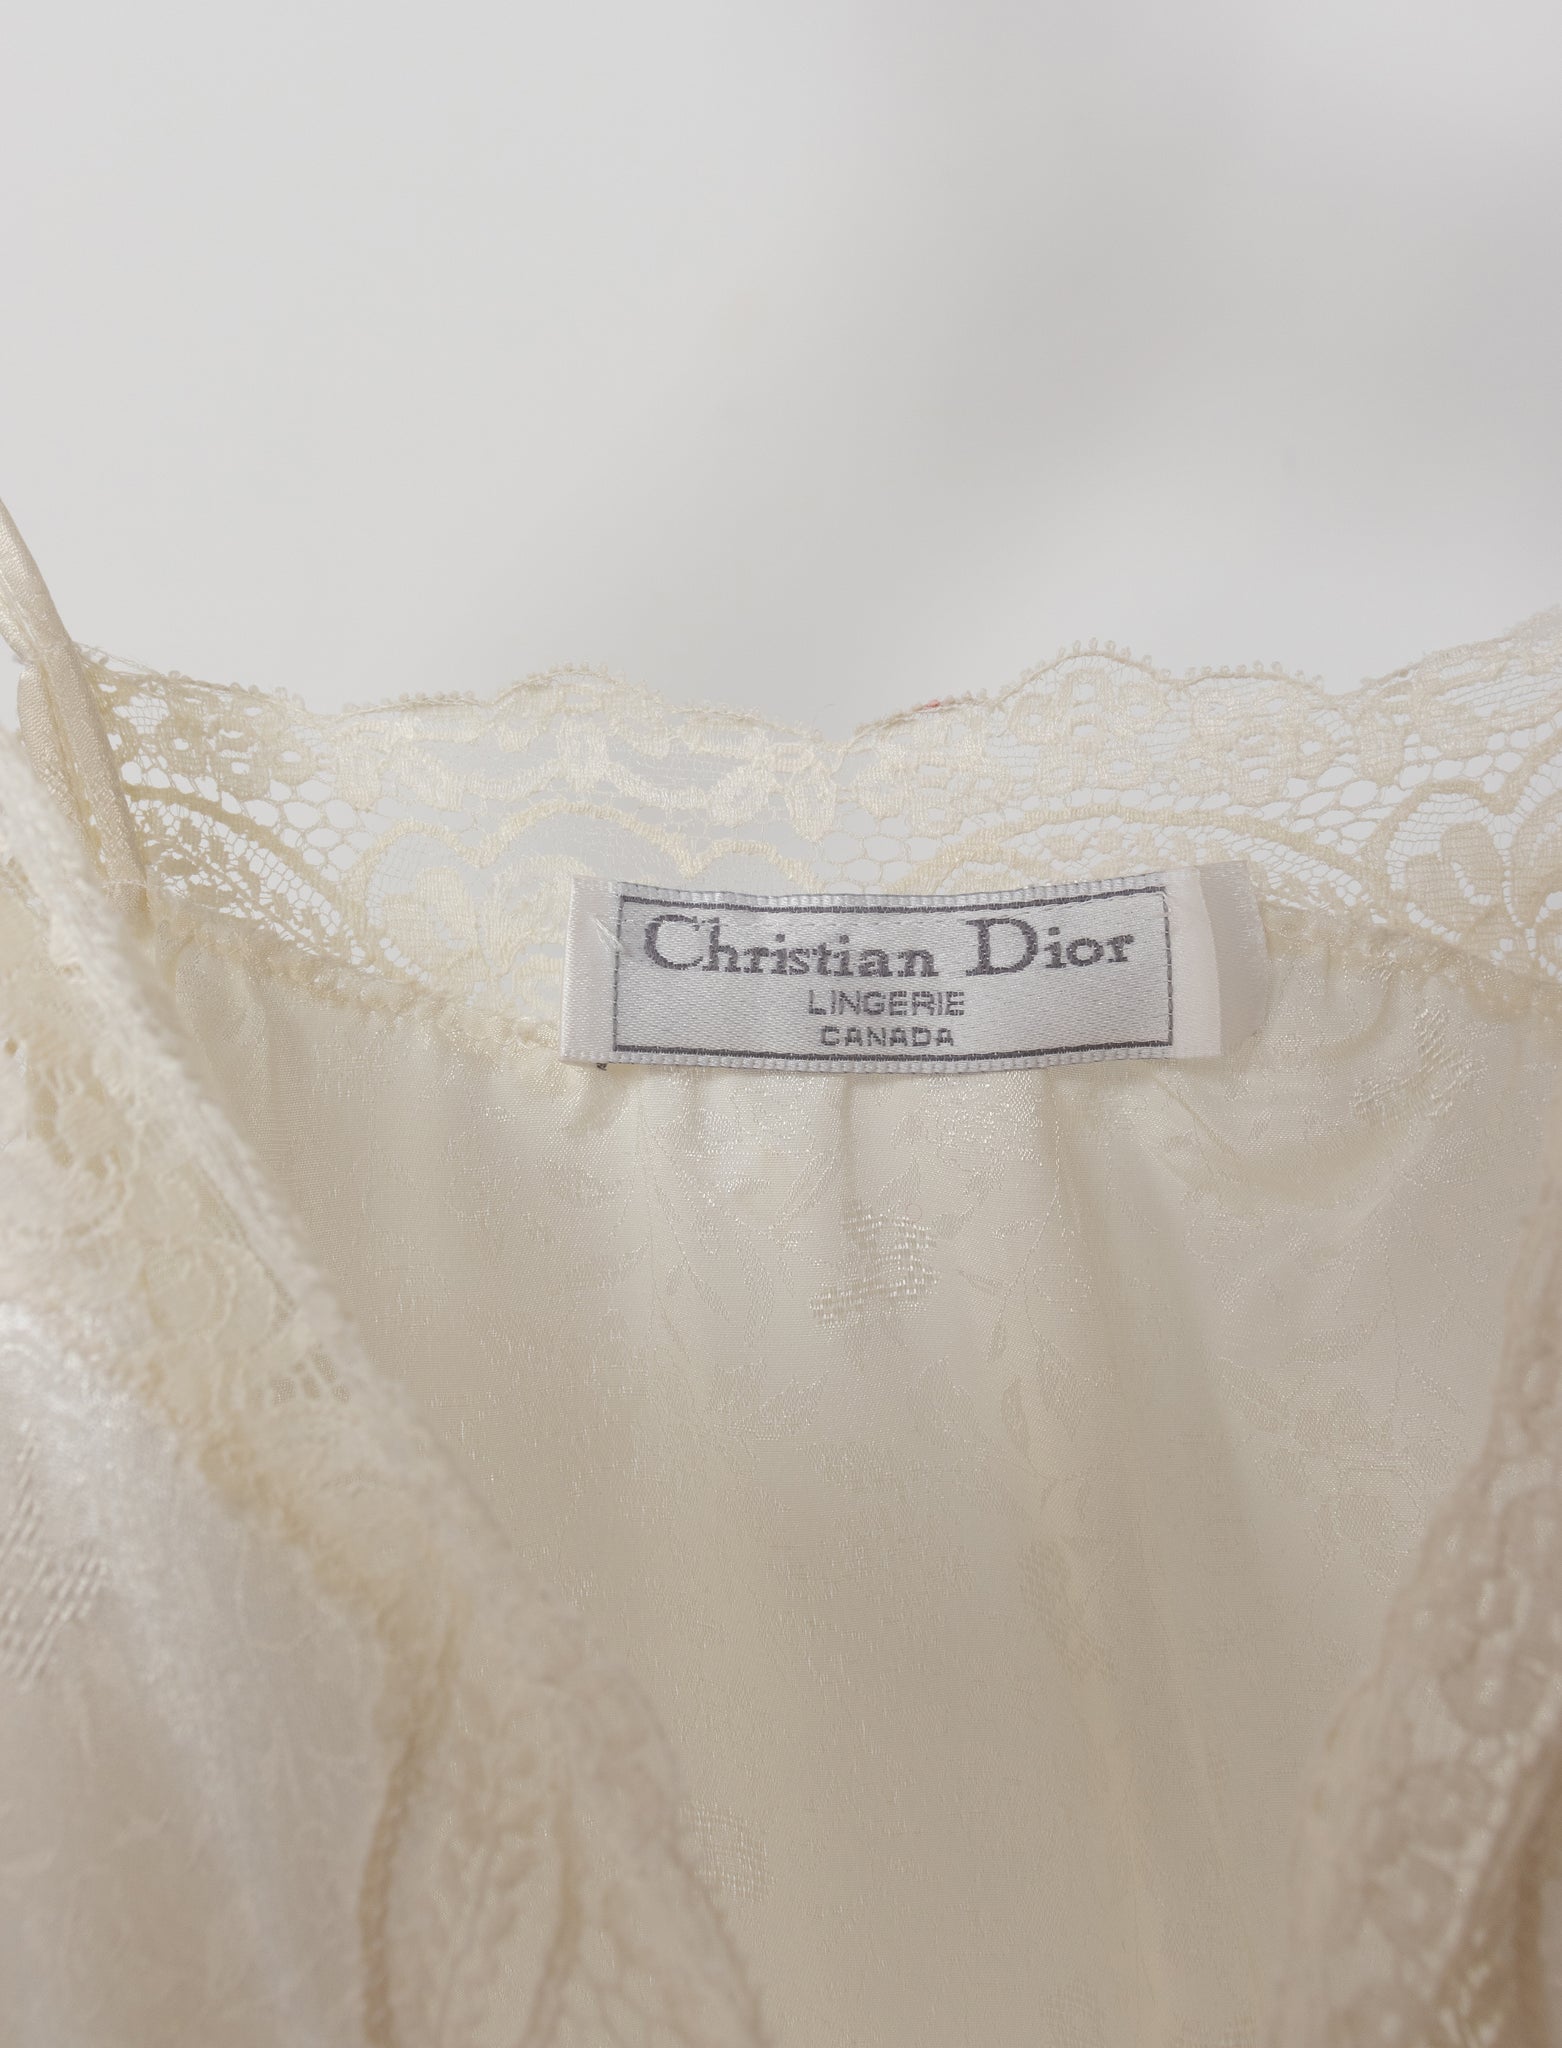 Christian Dior Lingerie